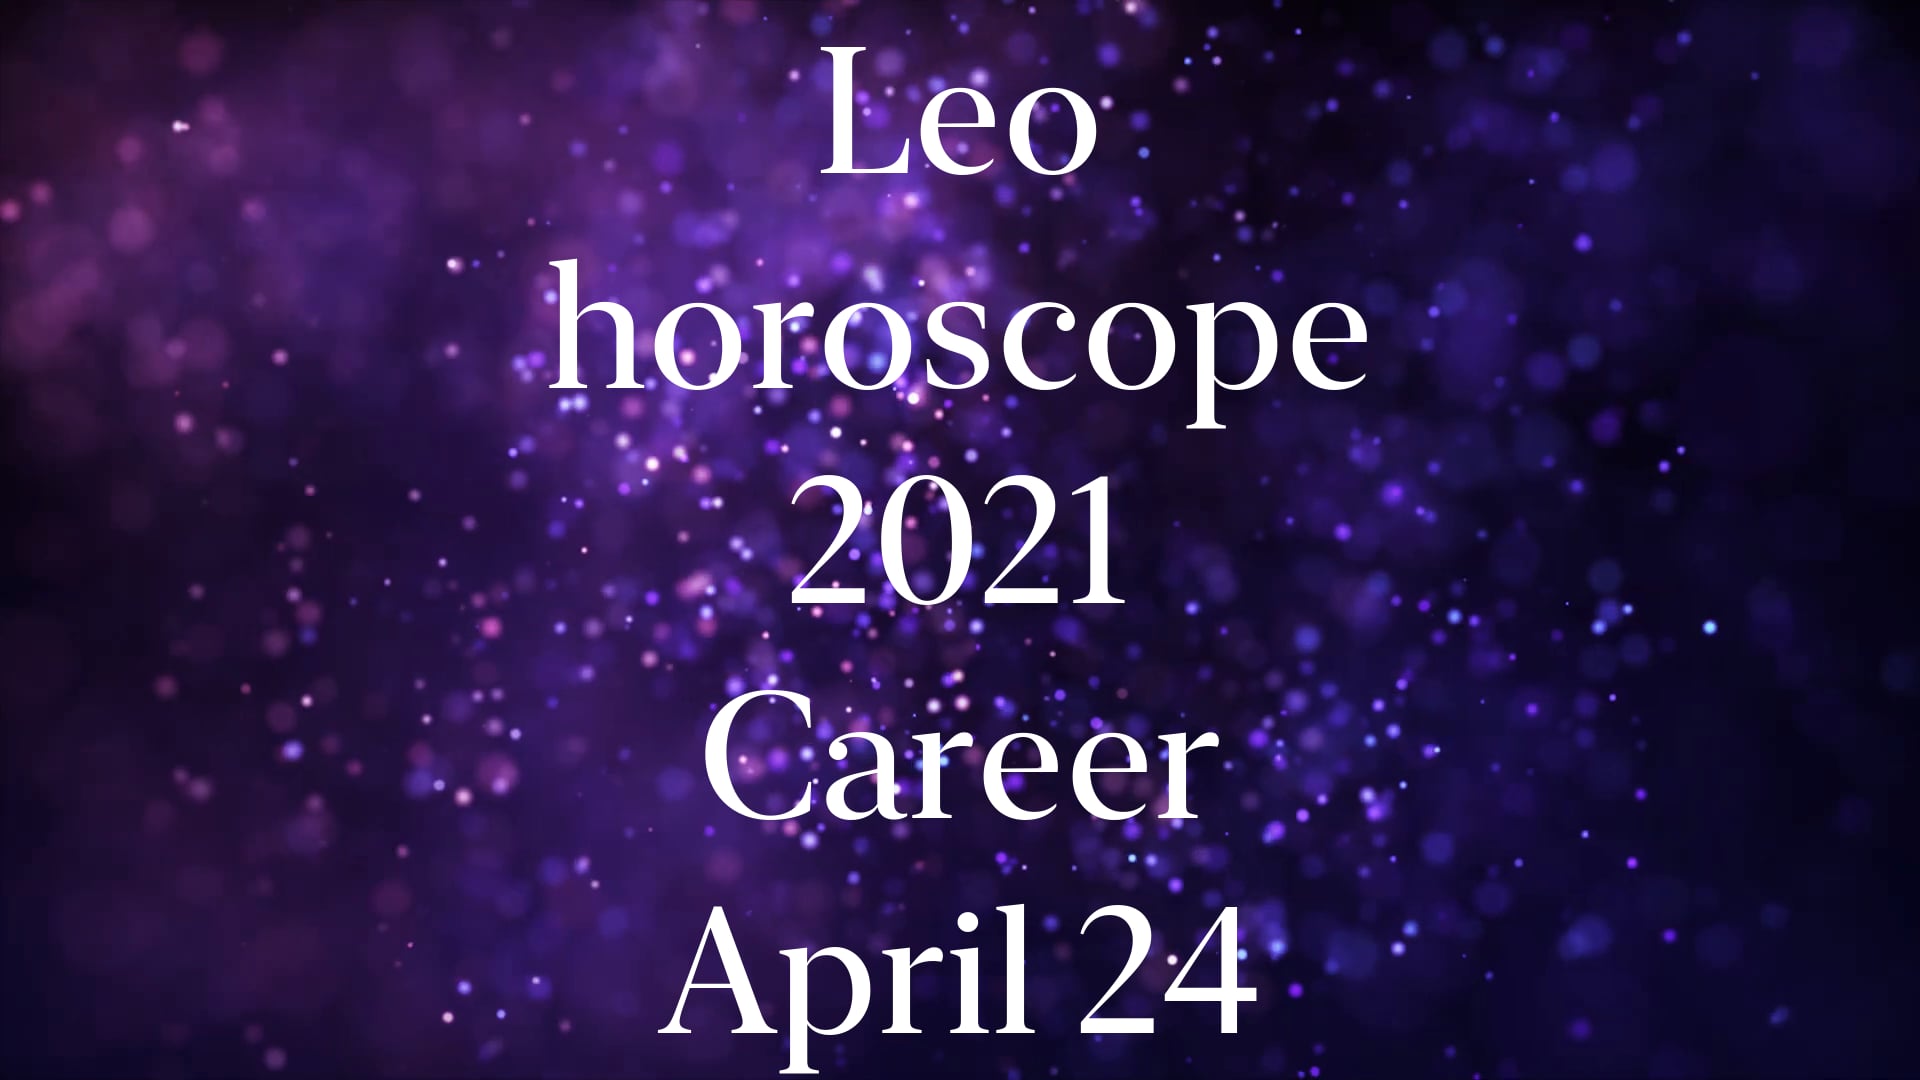 Leo April 24 Career Horoscope 2021 Shorts on Vimeo